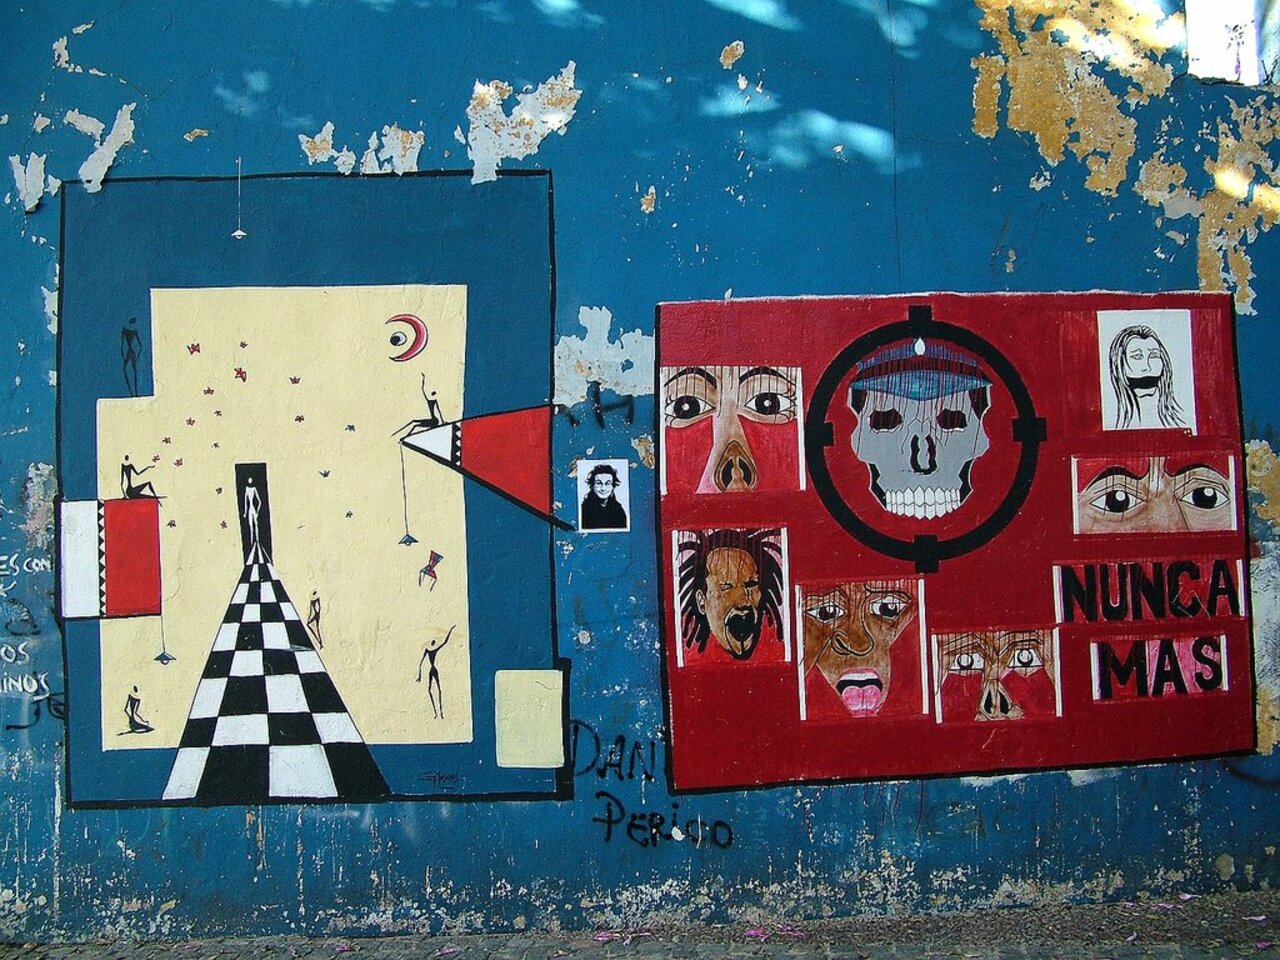 Street Art by Nojnoma in # http://www.urbacolors.com #art #mural #graffiti #streetart https://t.co/ZhQR1tJWCV